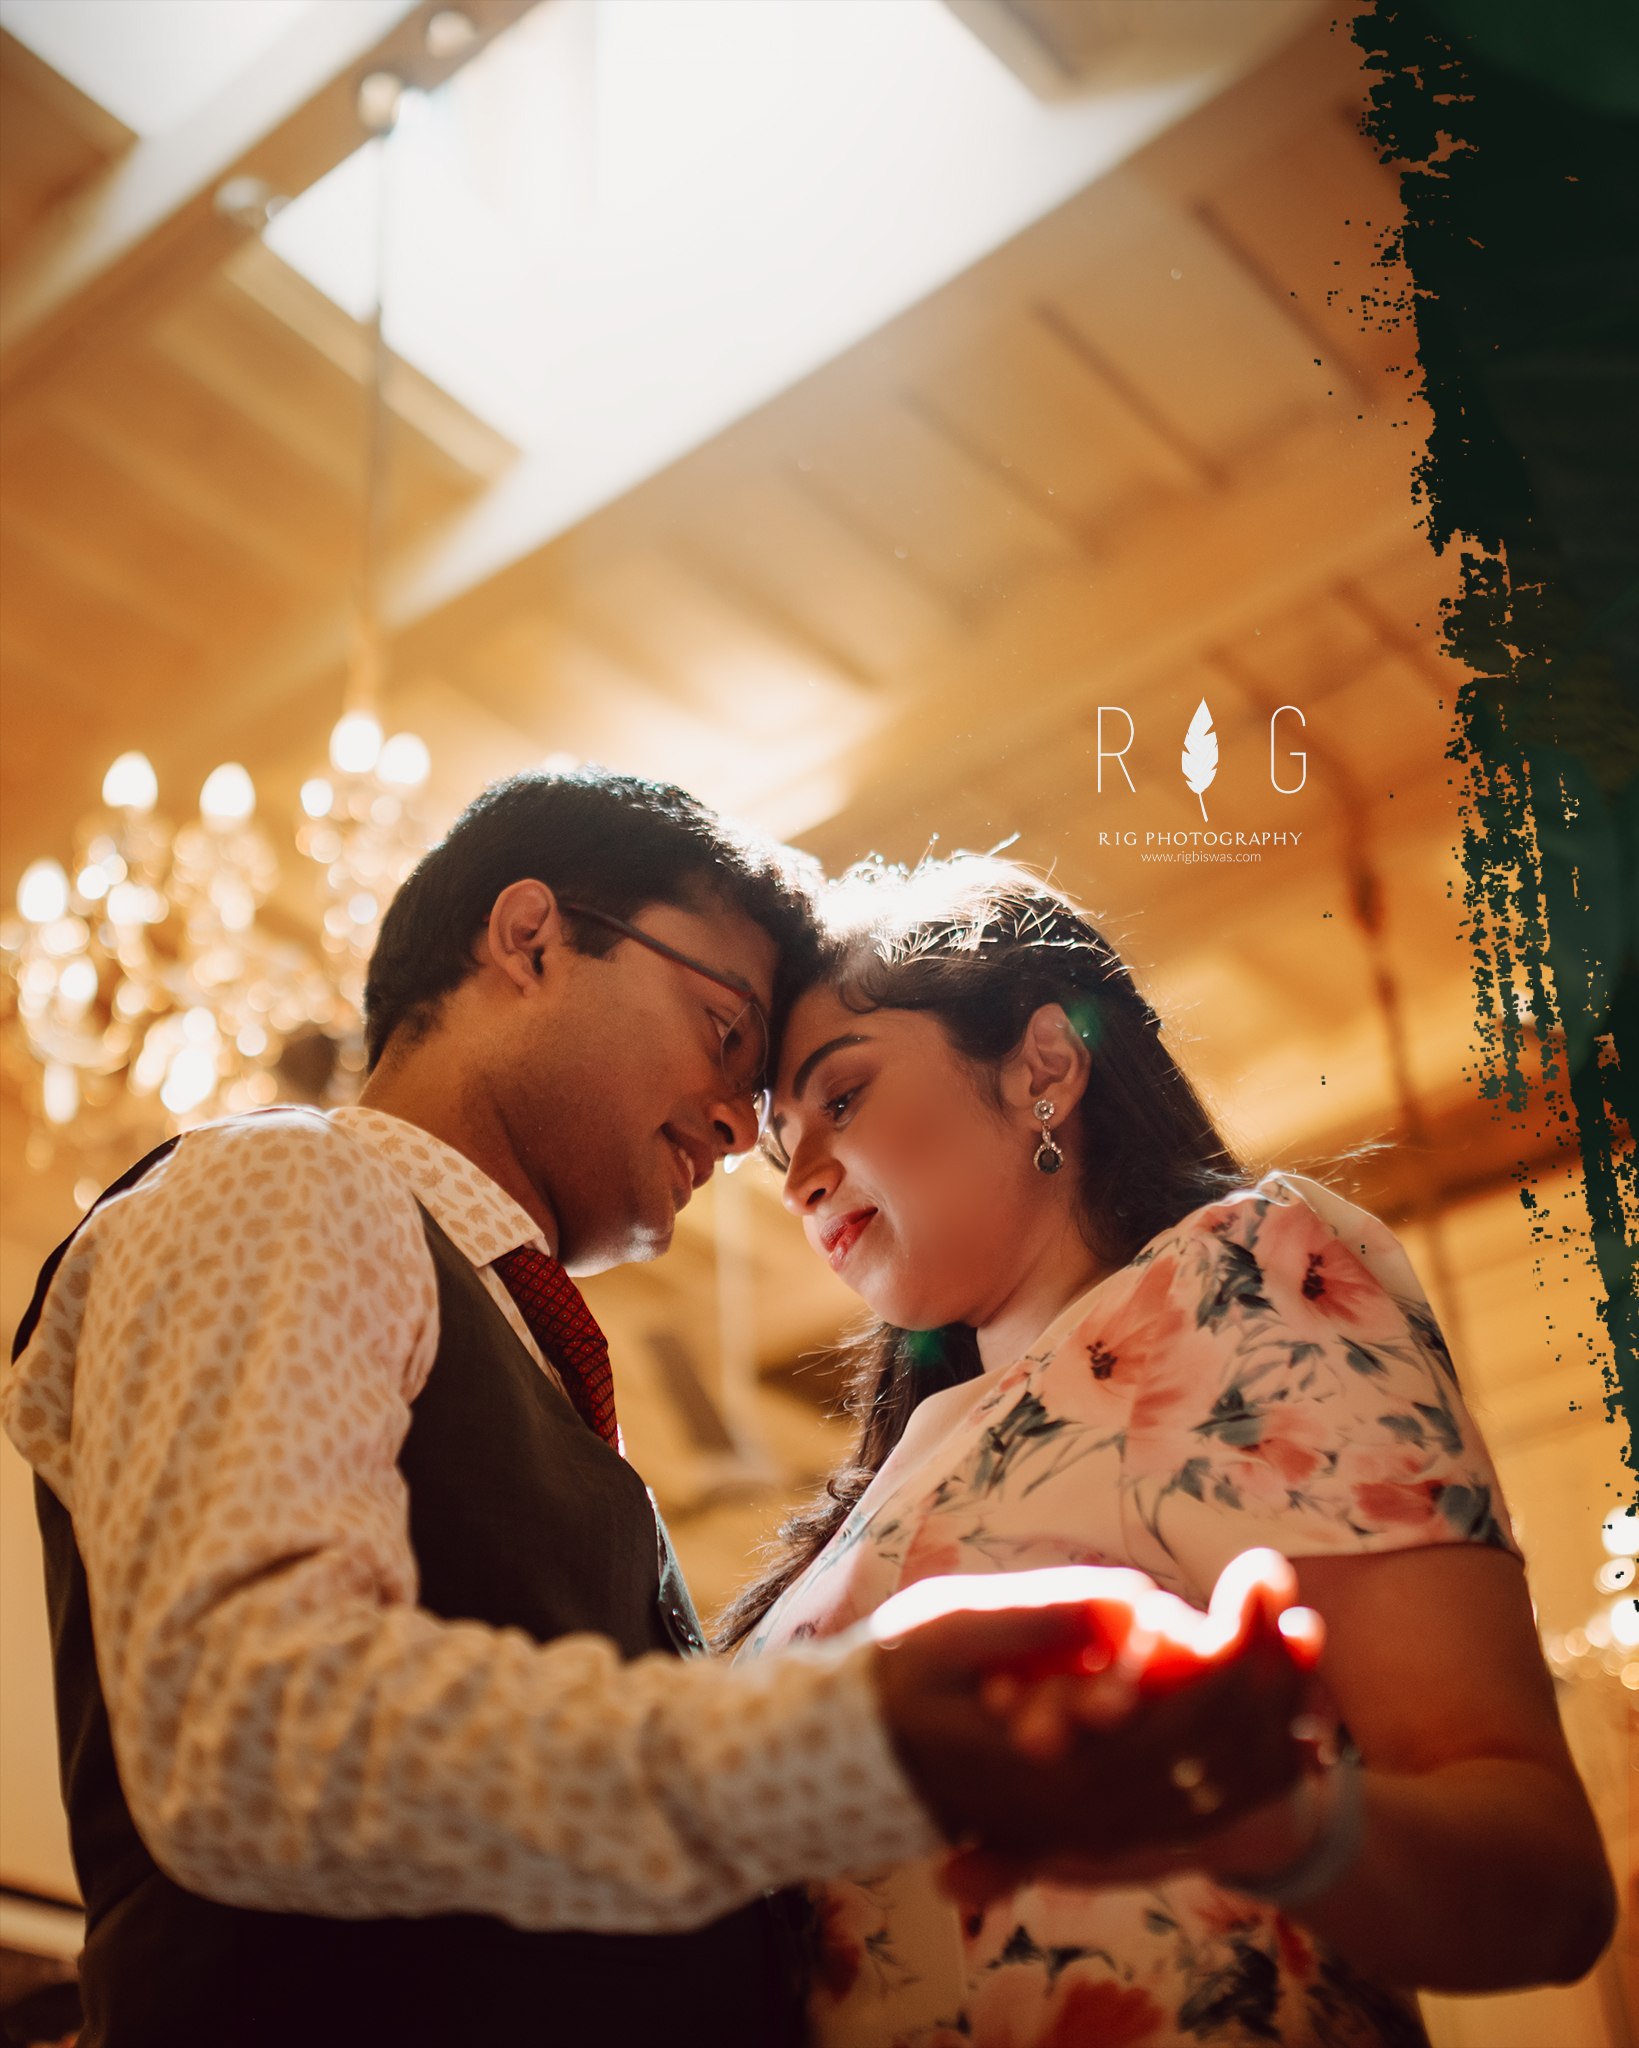 PRE WEDDING SHOOT COUPLE POSES preweddingposes  Instagram photos and  videos